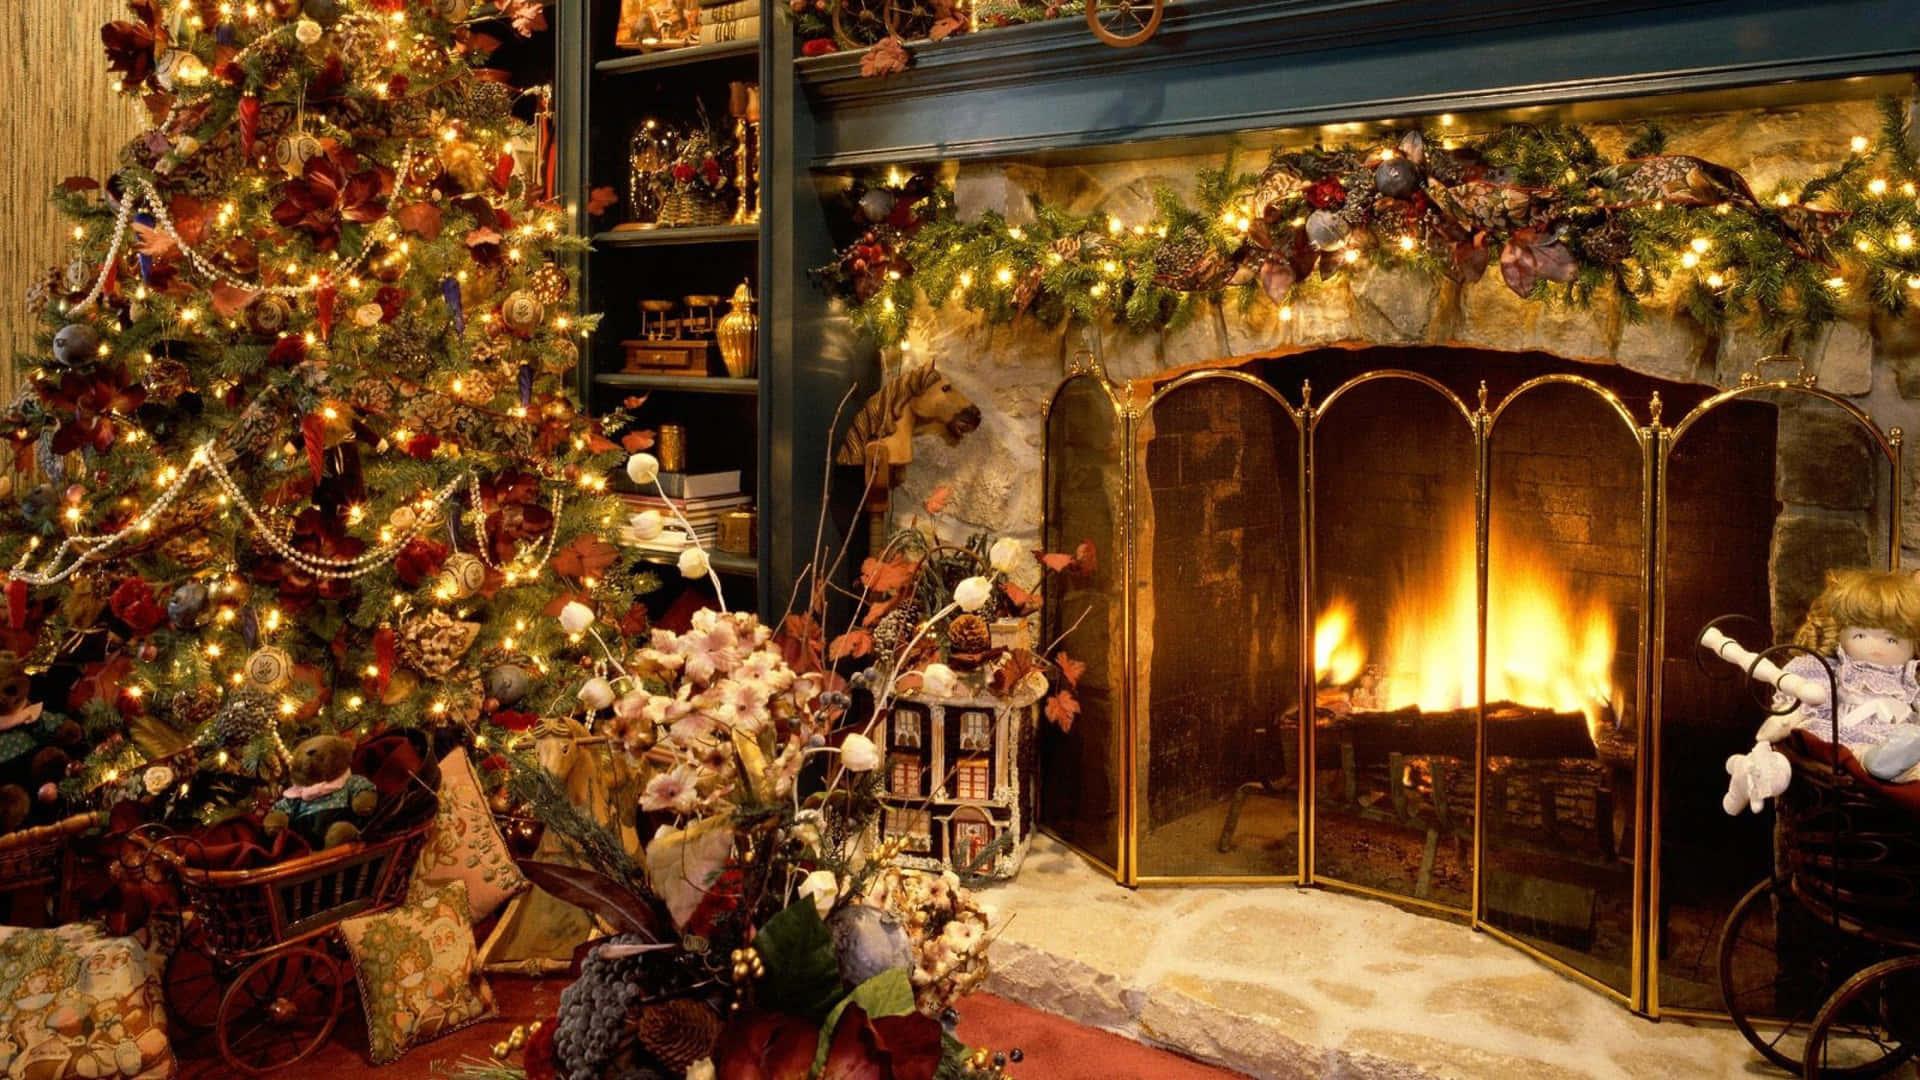 Cozy Christmas Fireplace Decorations.jpg Wallpaper